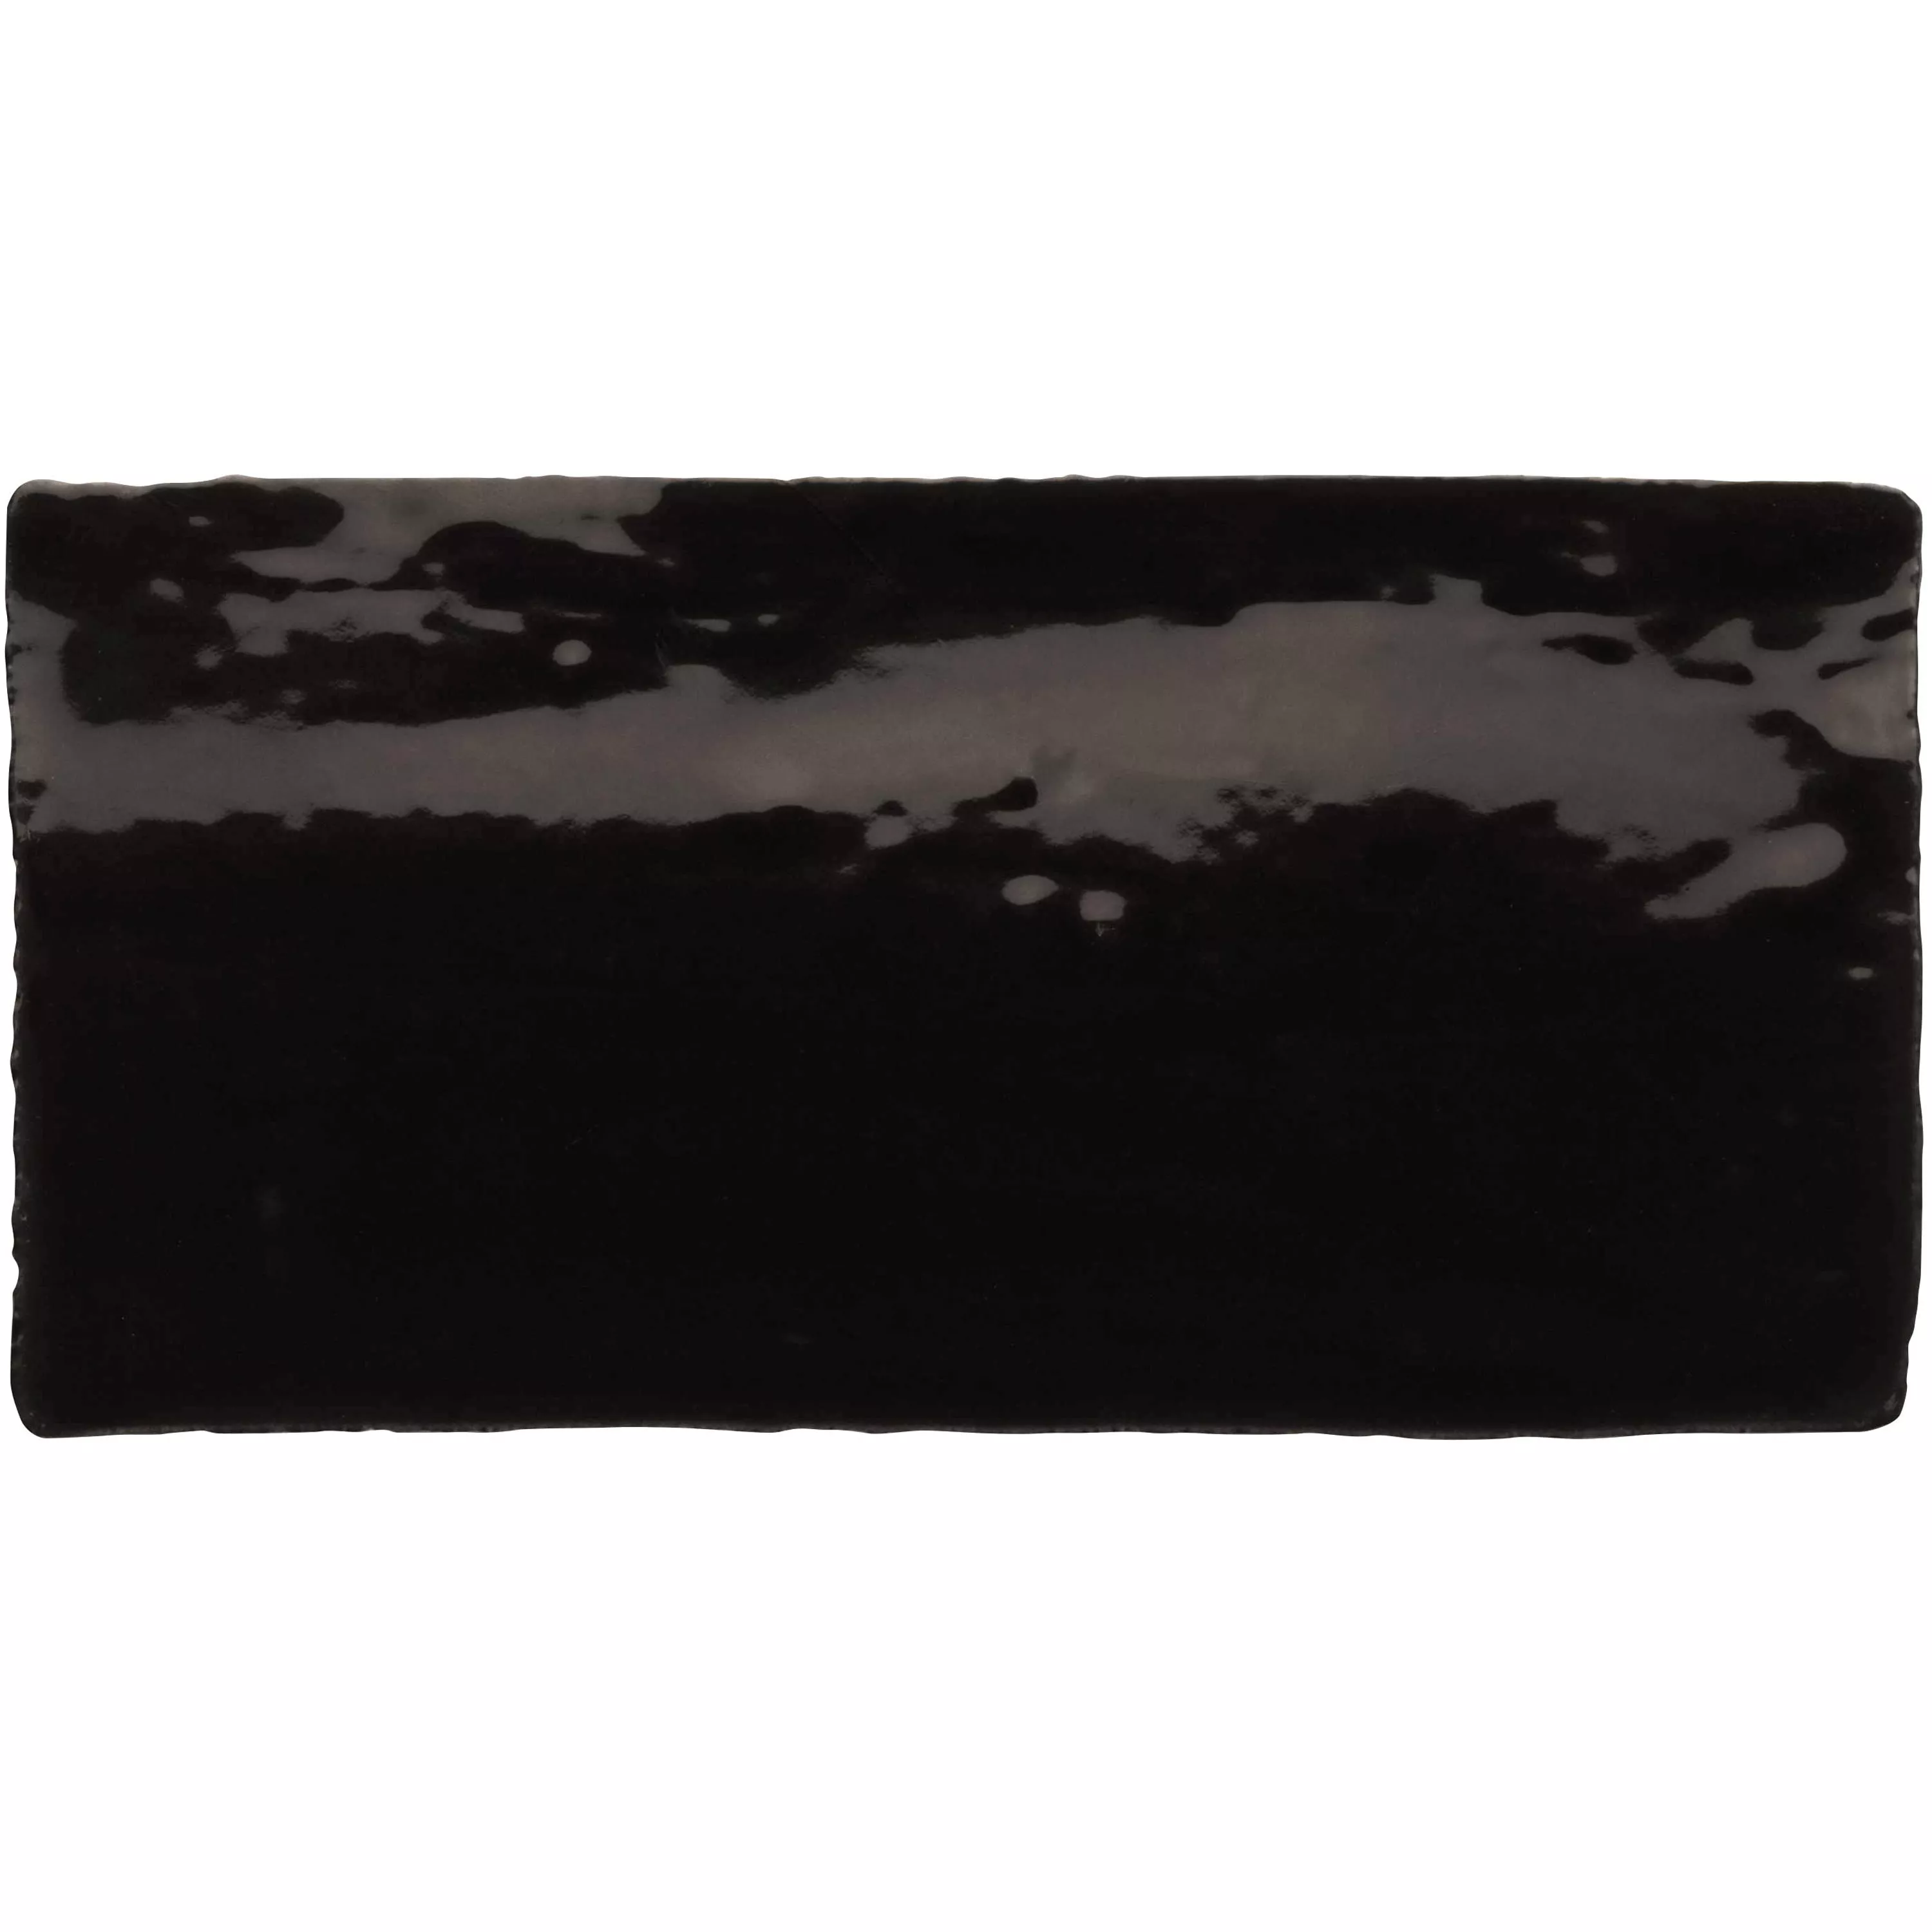 Échantillon Carrelage Mural Algier Artisanat 7,5x15cm Noir